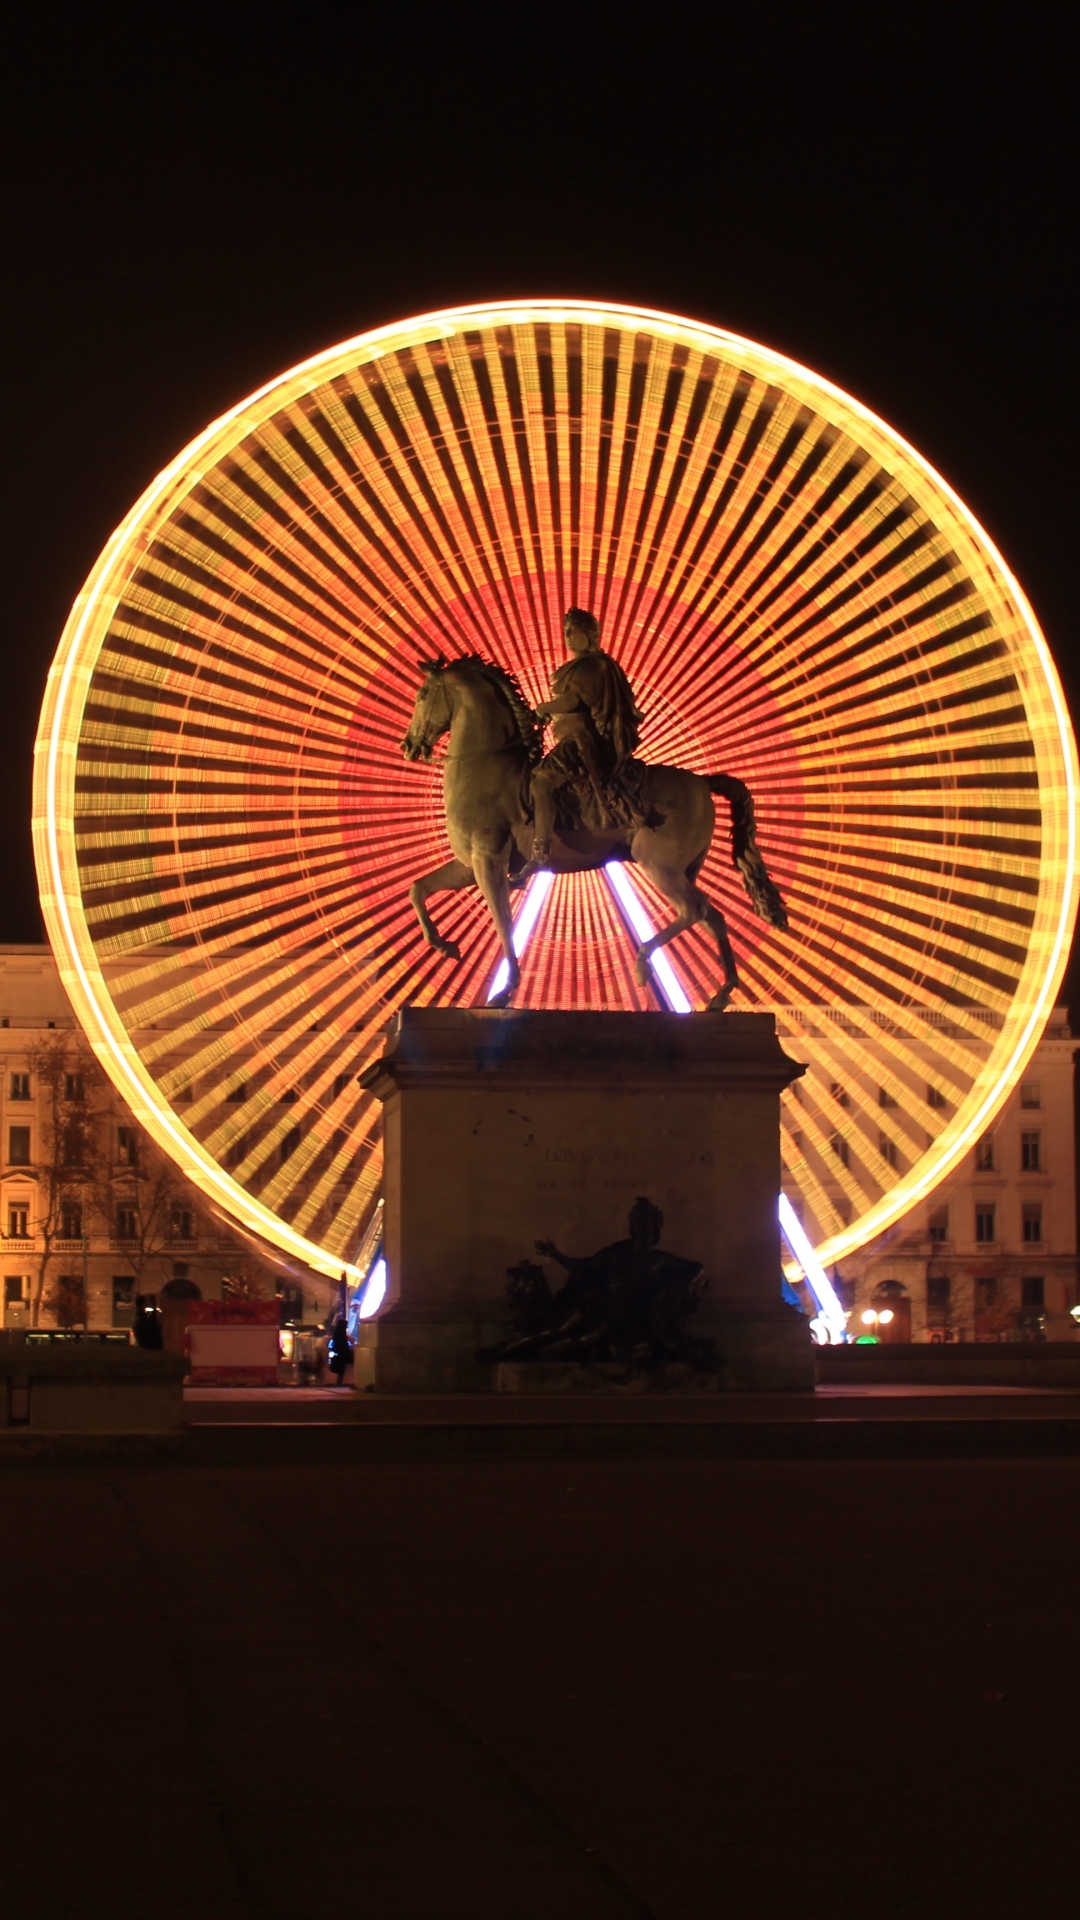 Ferris wheel andStatue of King Louis XIV in La Place Bellecour Lyon, France by Thomas43